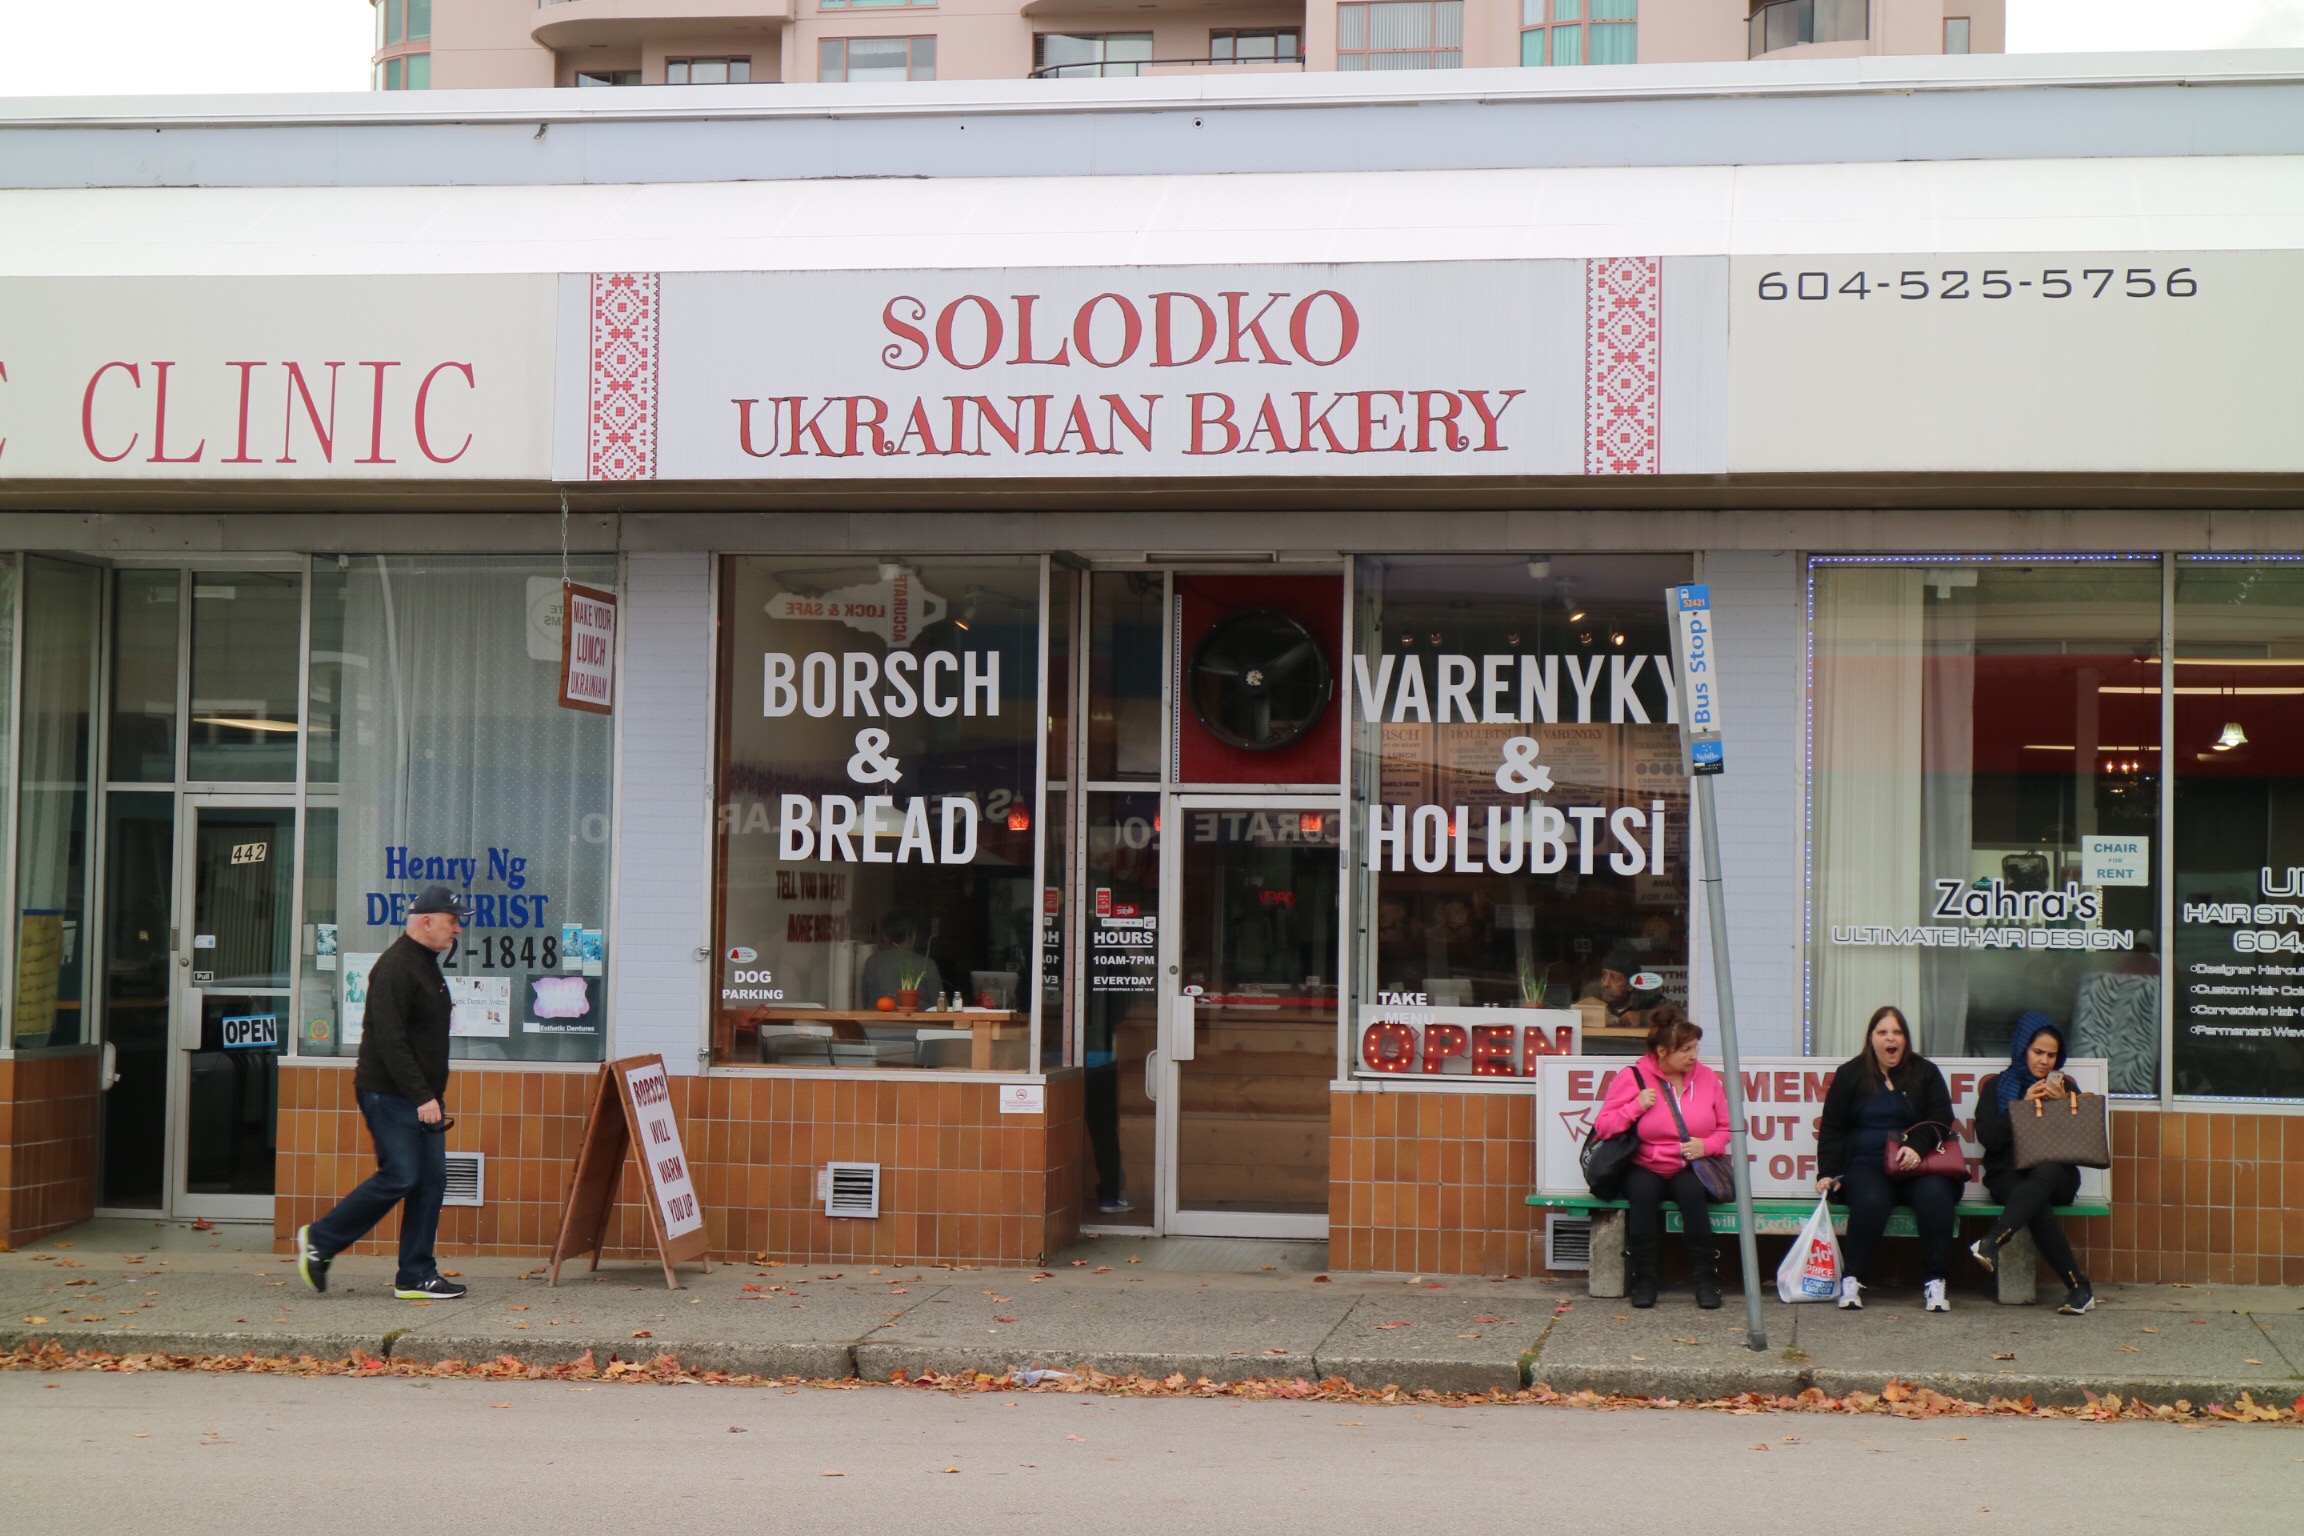 Solodko Ukrainian Bakery